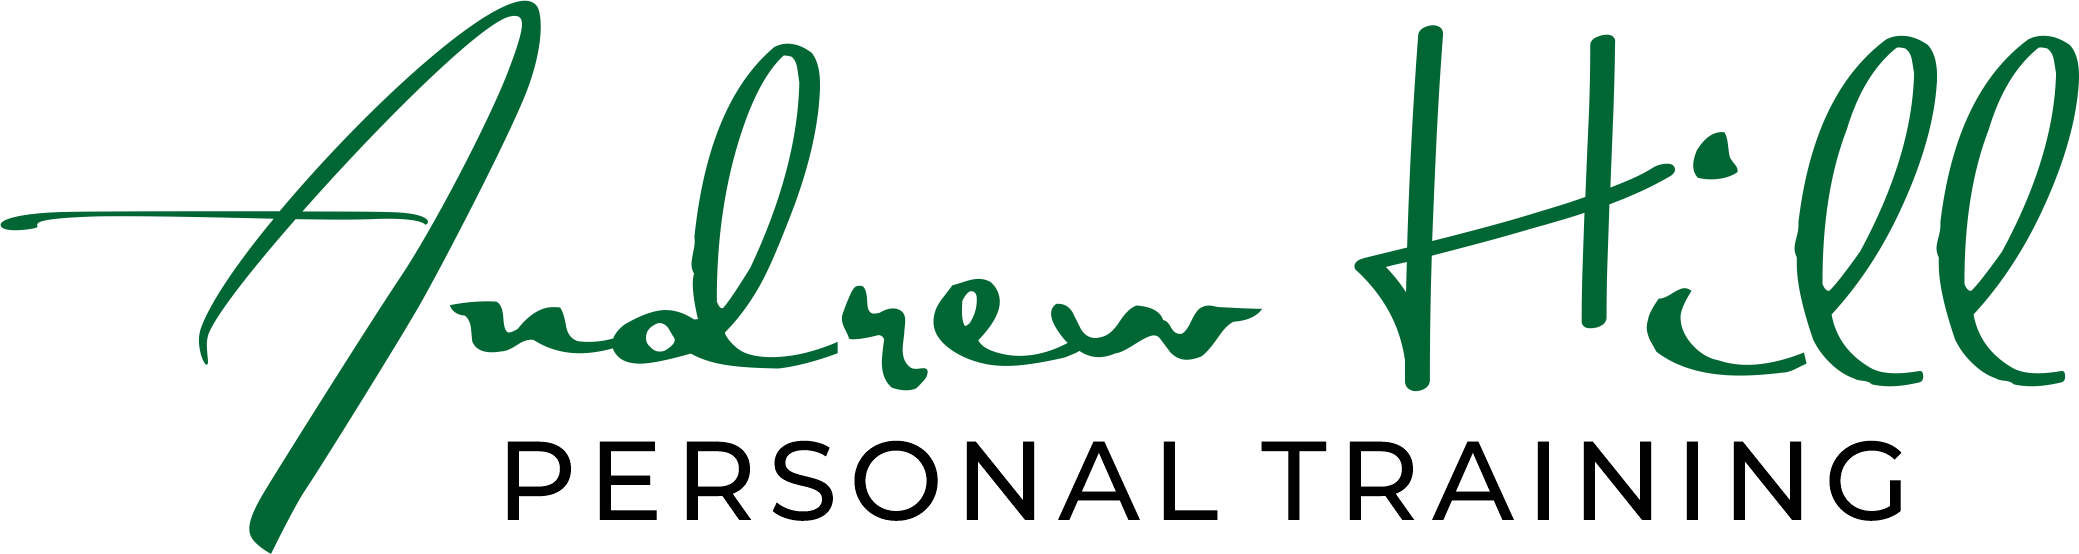 Andrew Hill Logo